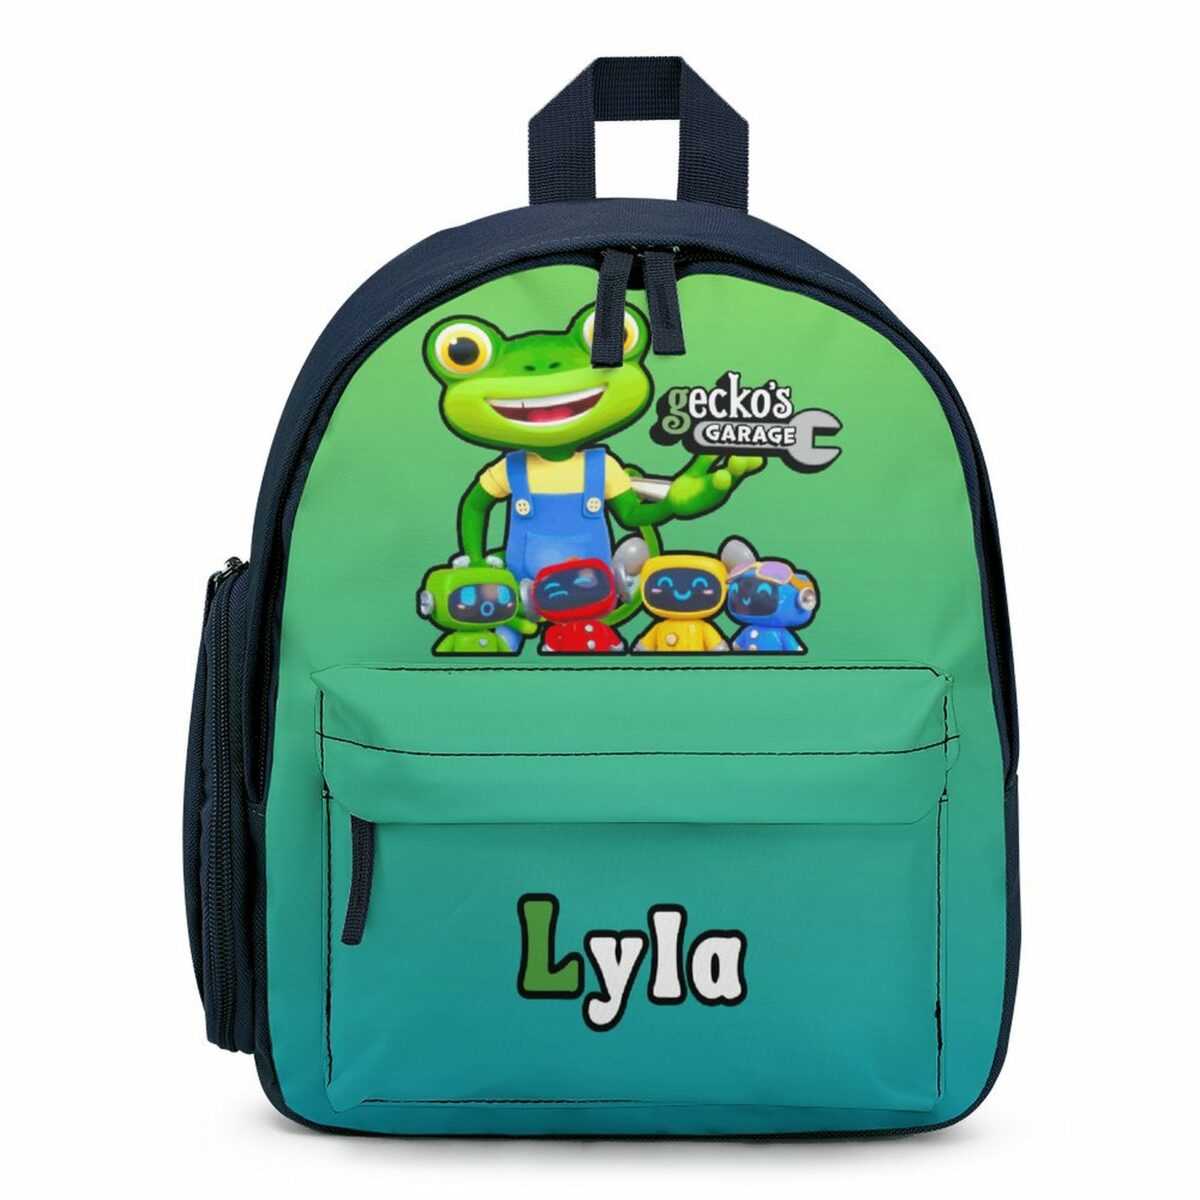 Gecko’s Garage Animated Series Character Children’s School Bag Cool Kiddo 10